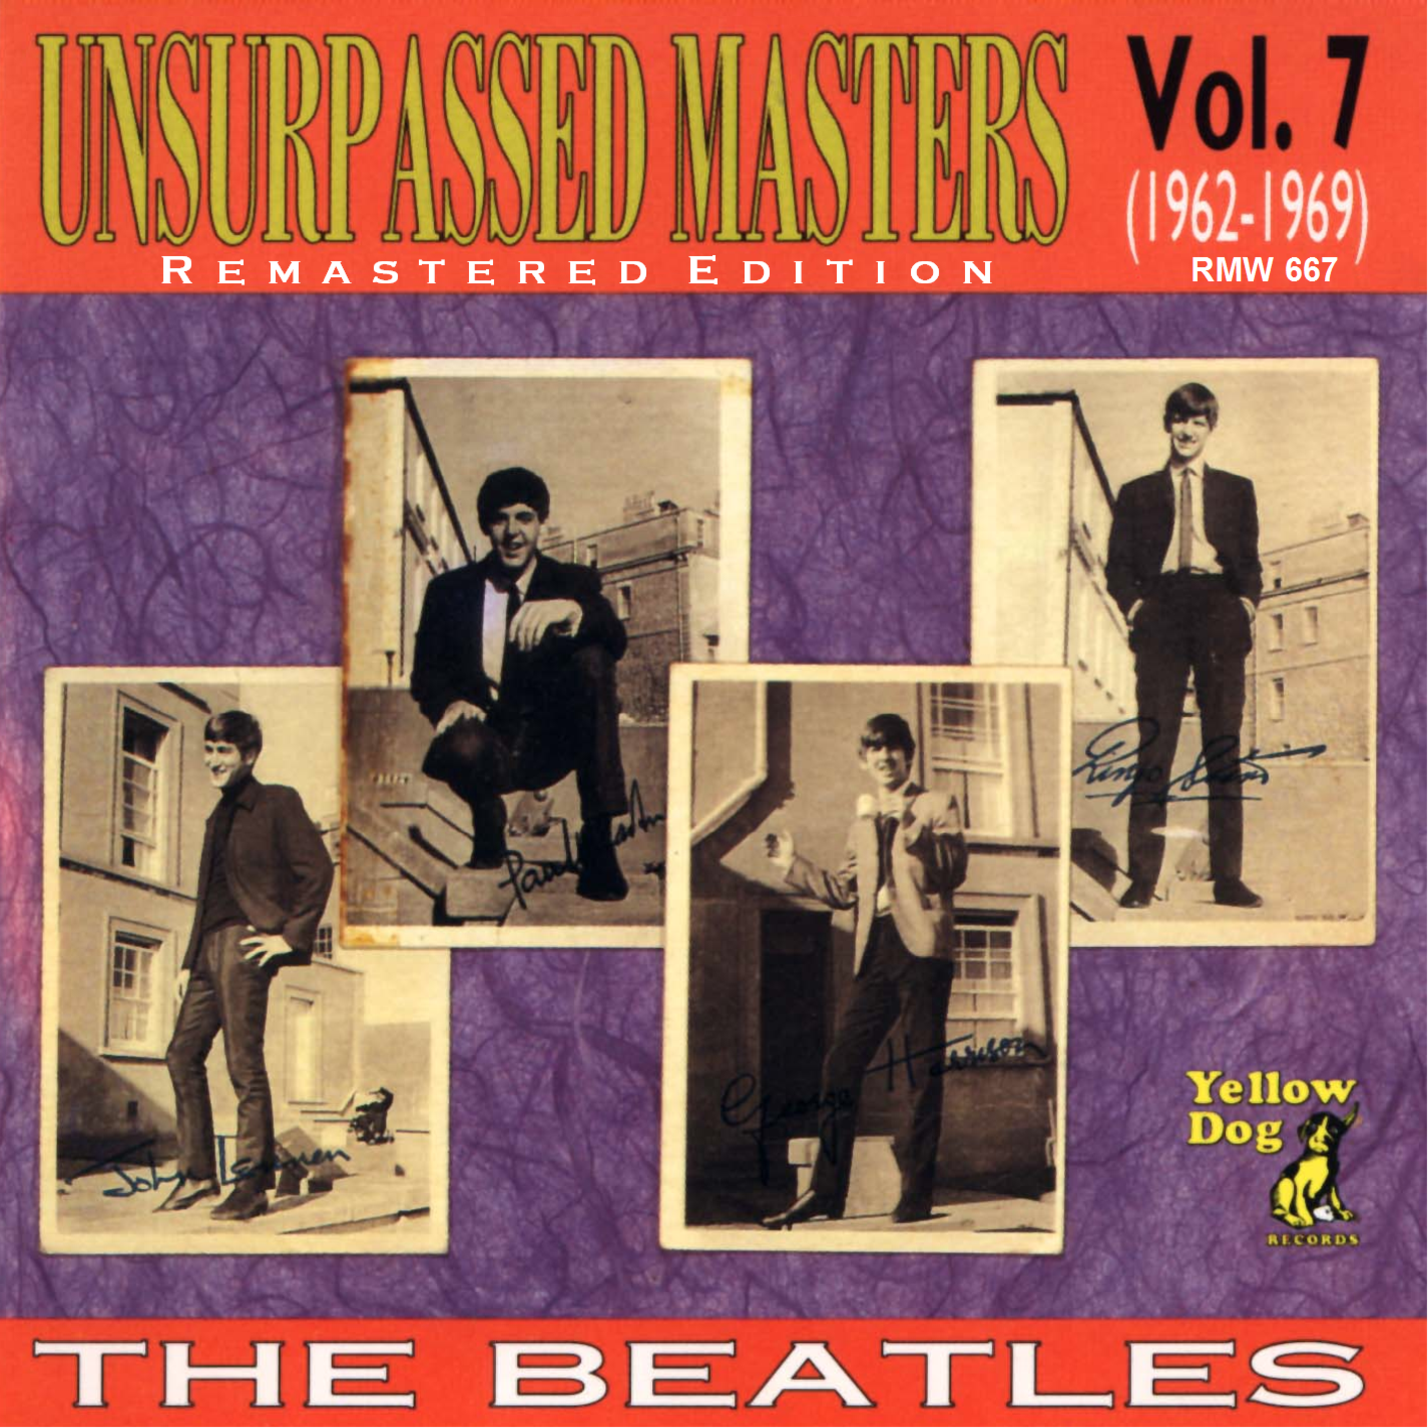 Beatles196xUnsurpassedMastersVol7 (2).png